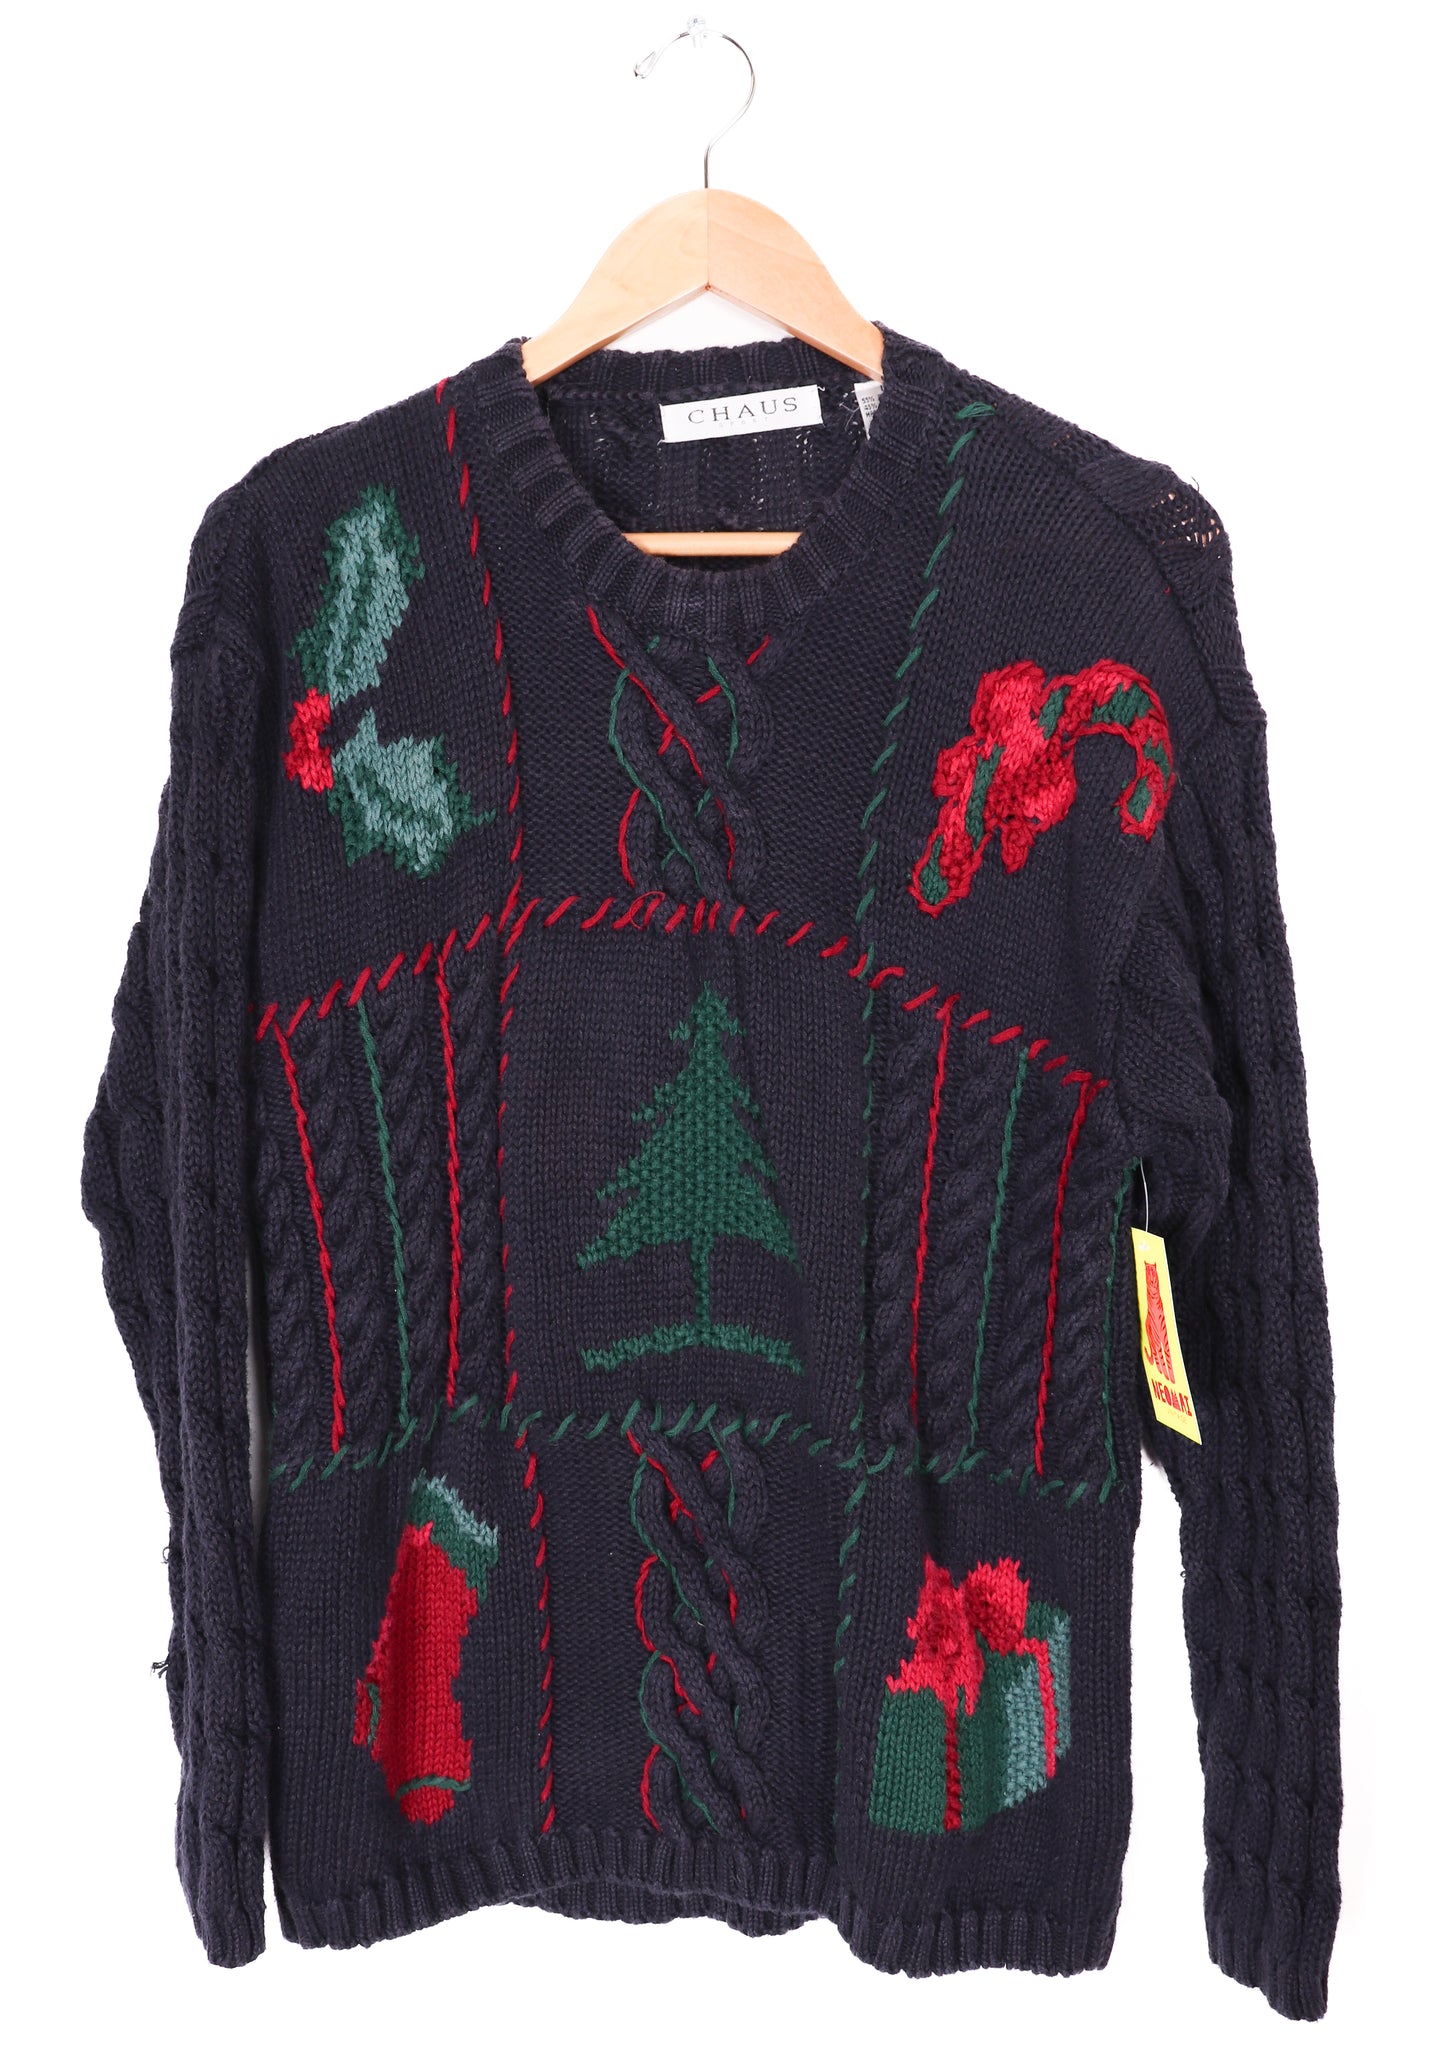 Chaus Sport Hard Knit Christmas Sweater